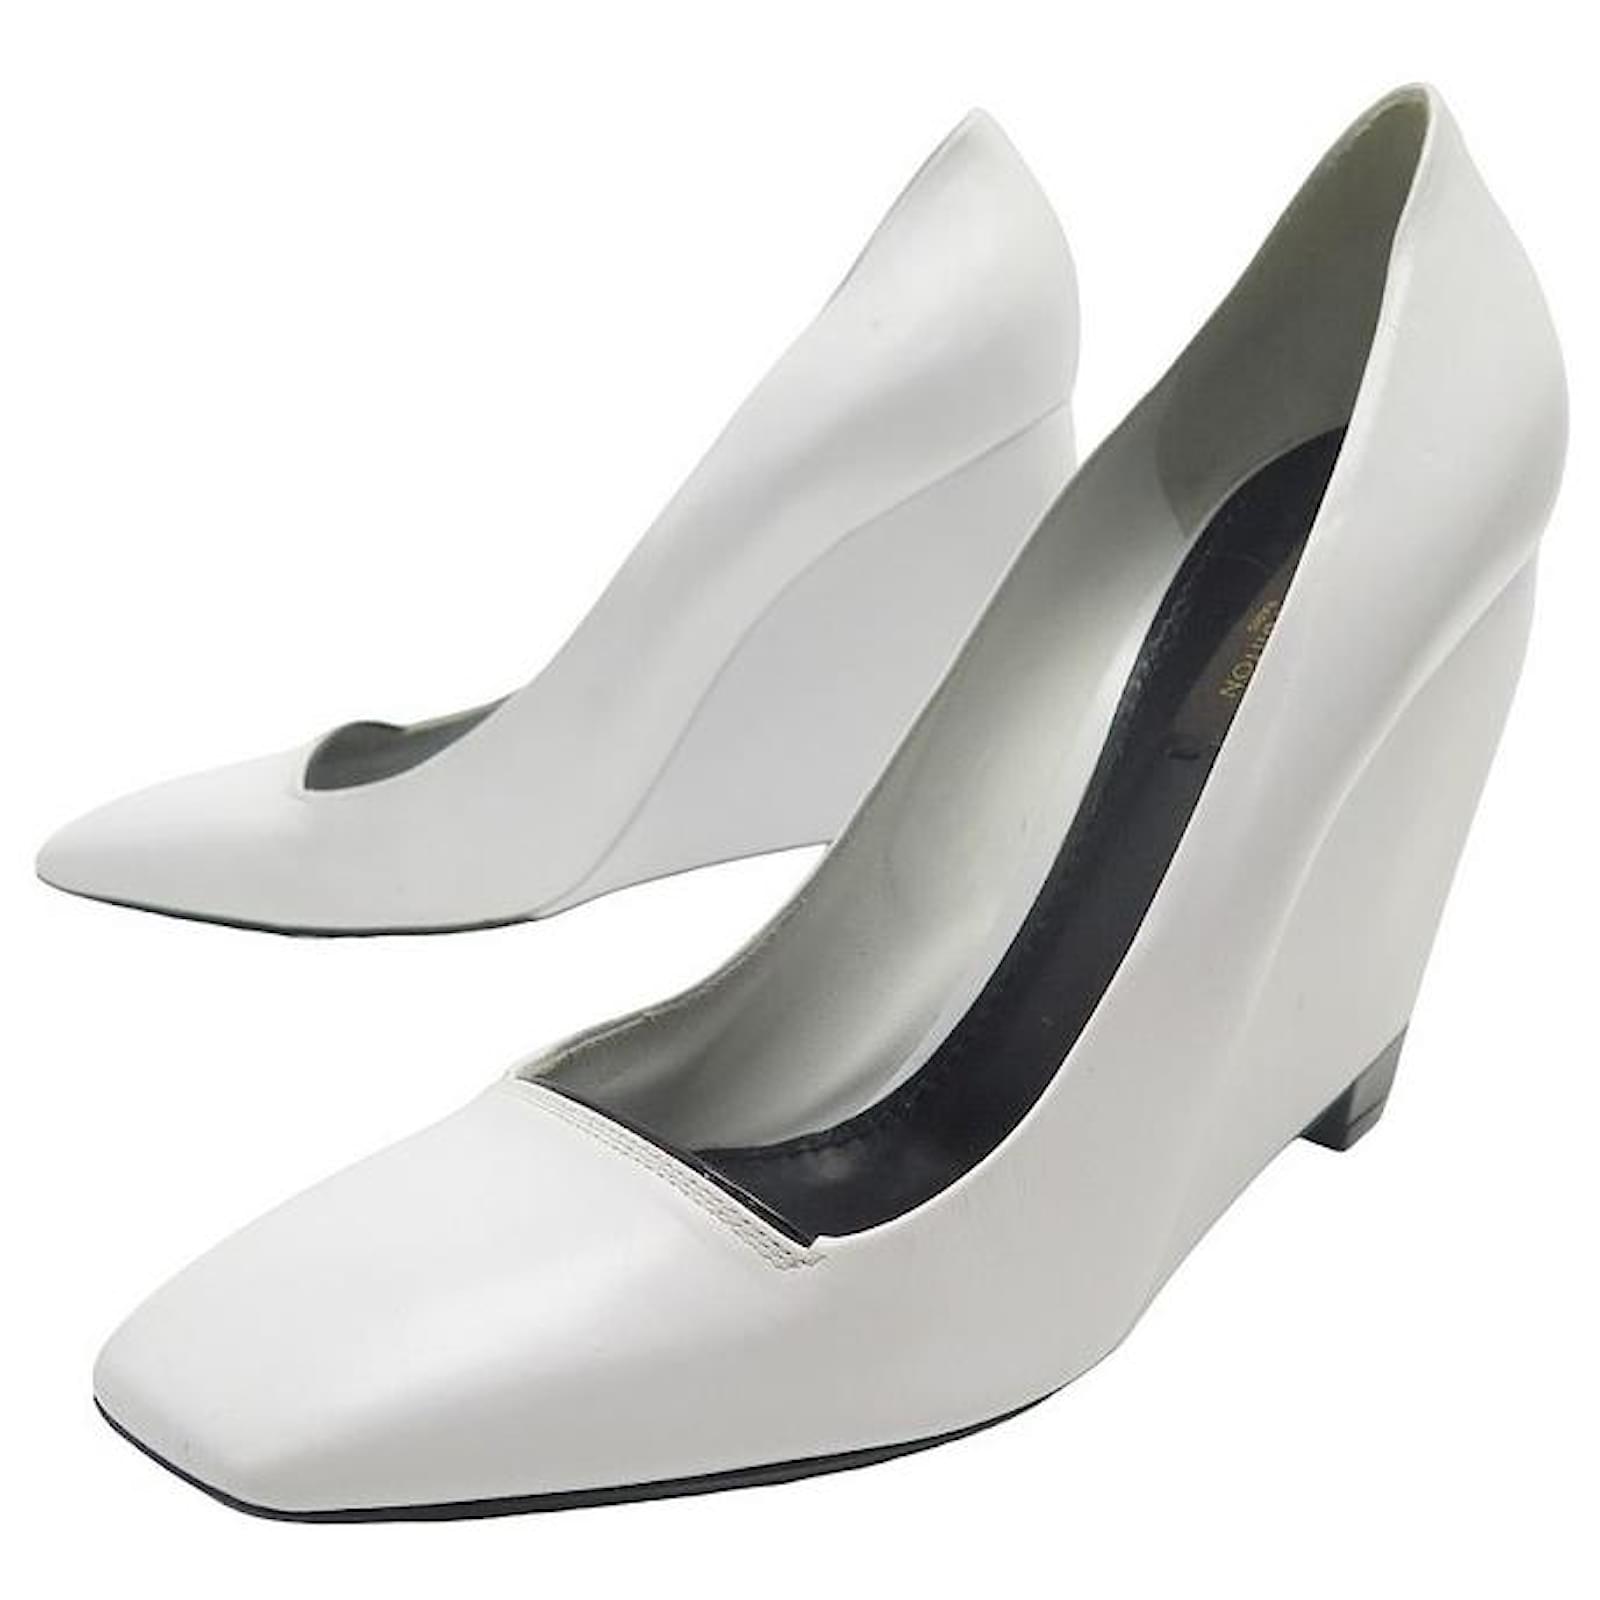 louis vuitton heels white